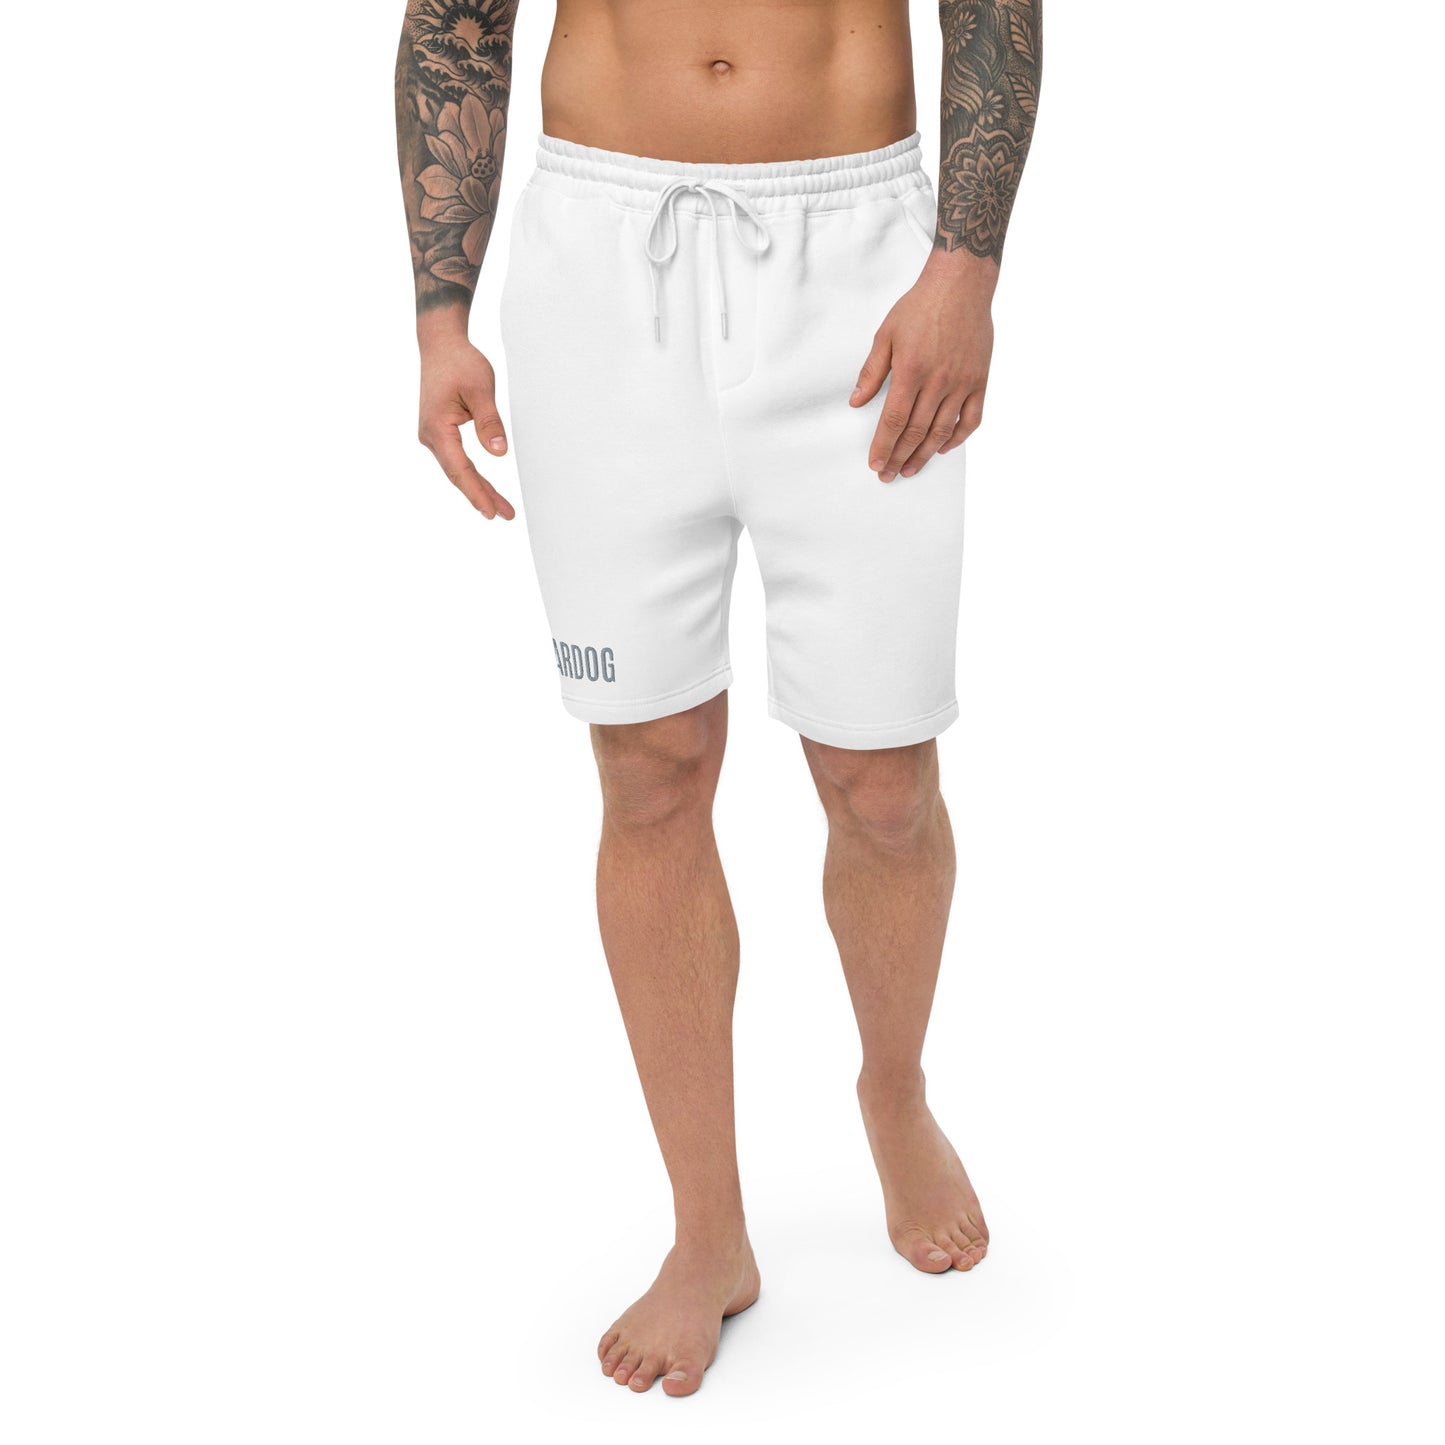 Men's WARDOG fleece shorts